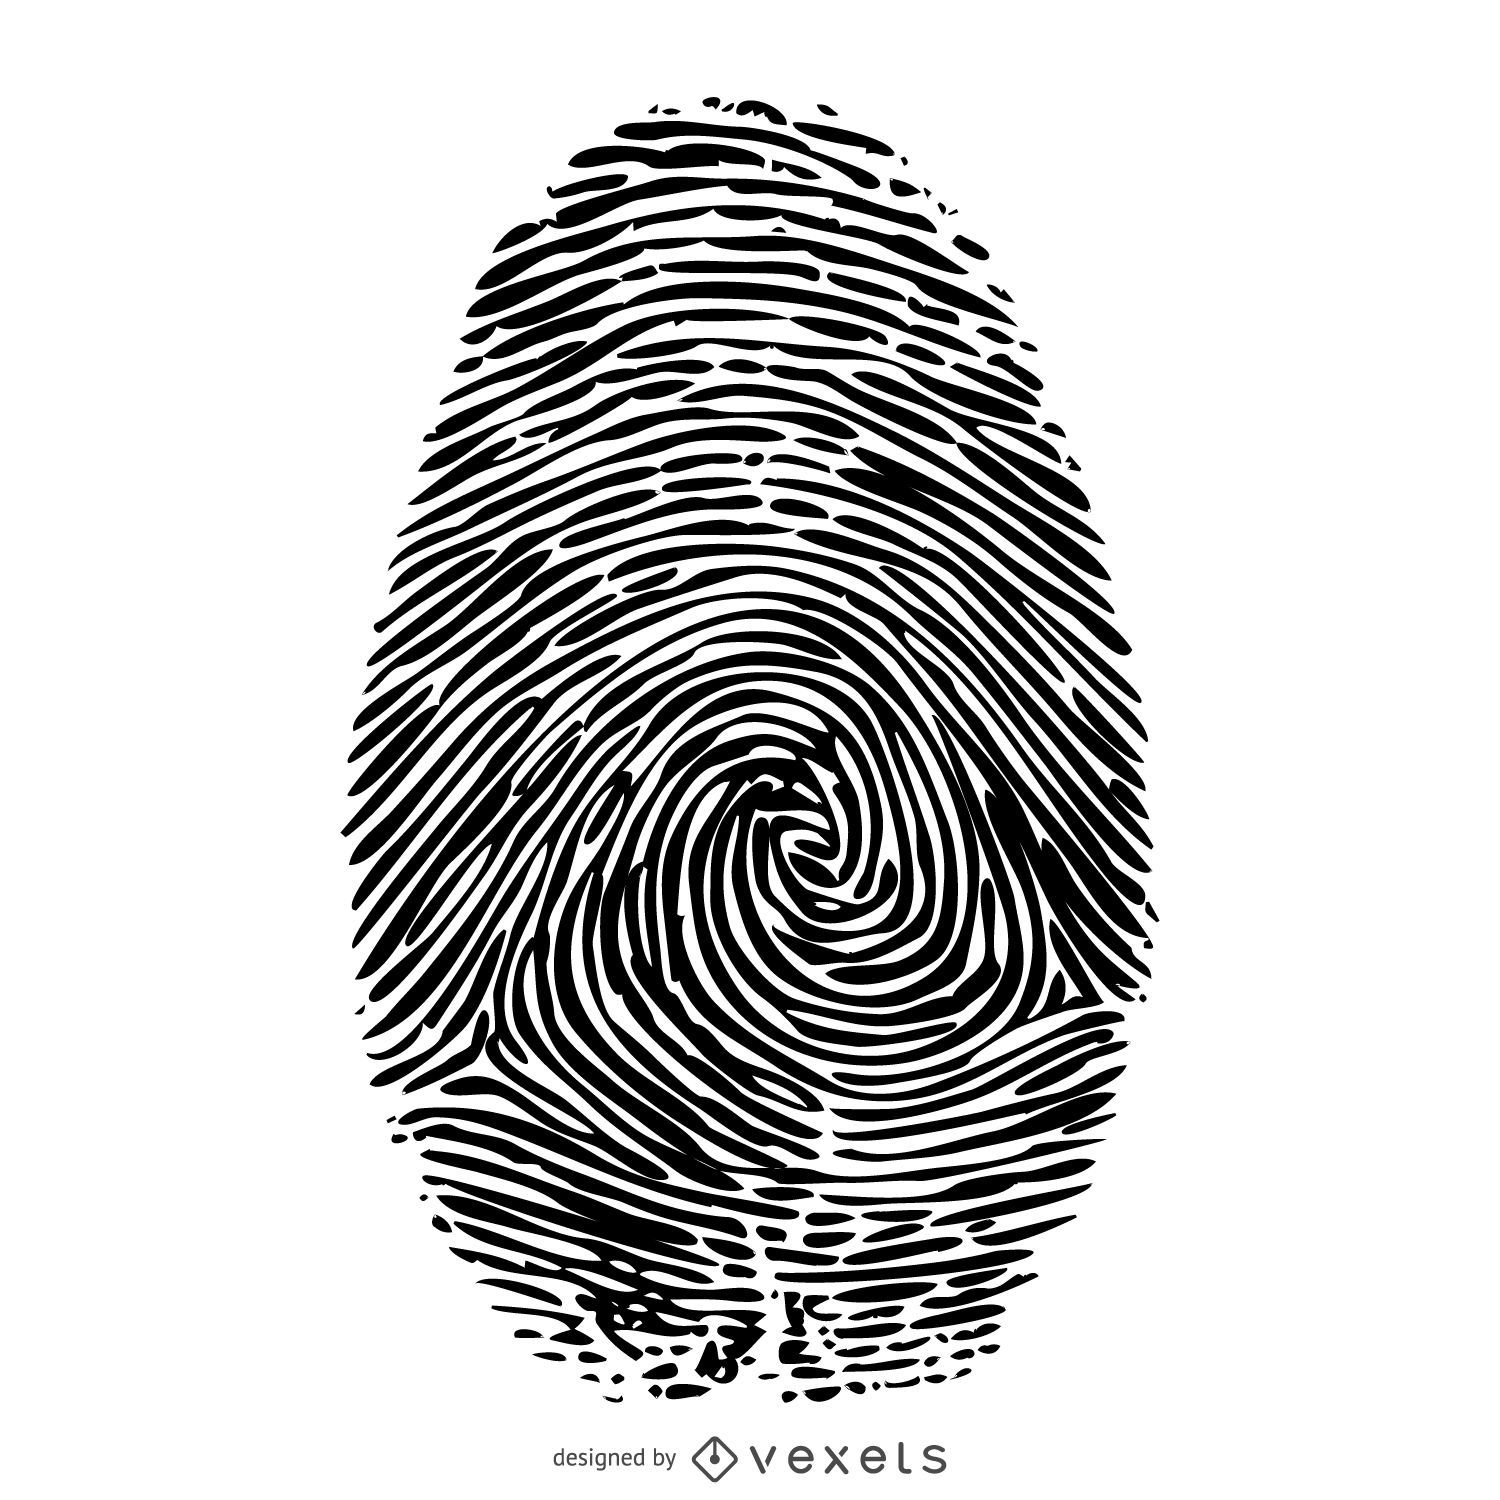 simple fingerprint vector